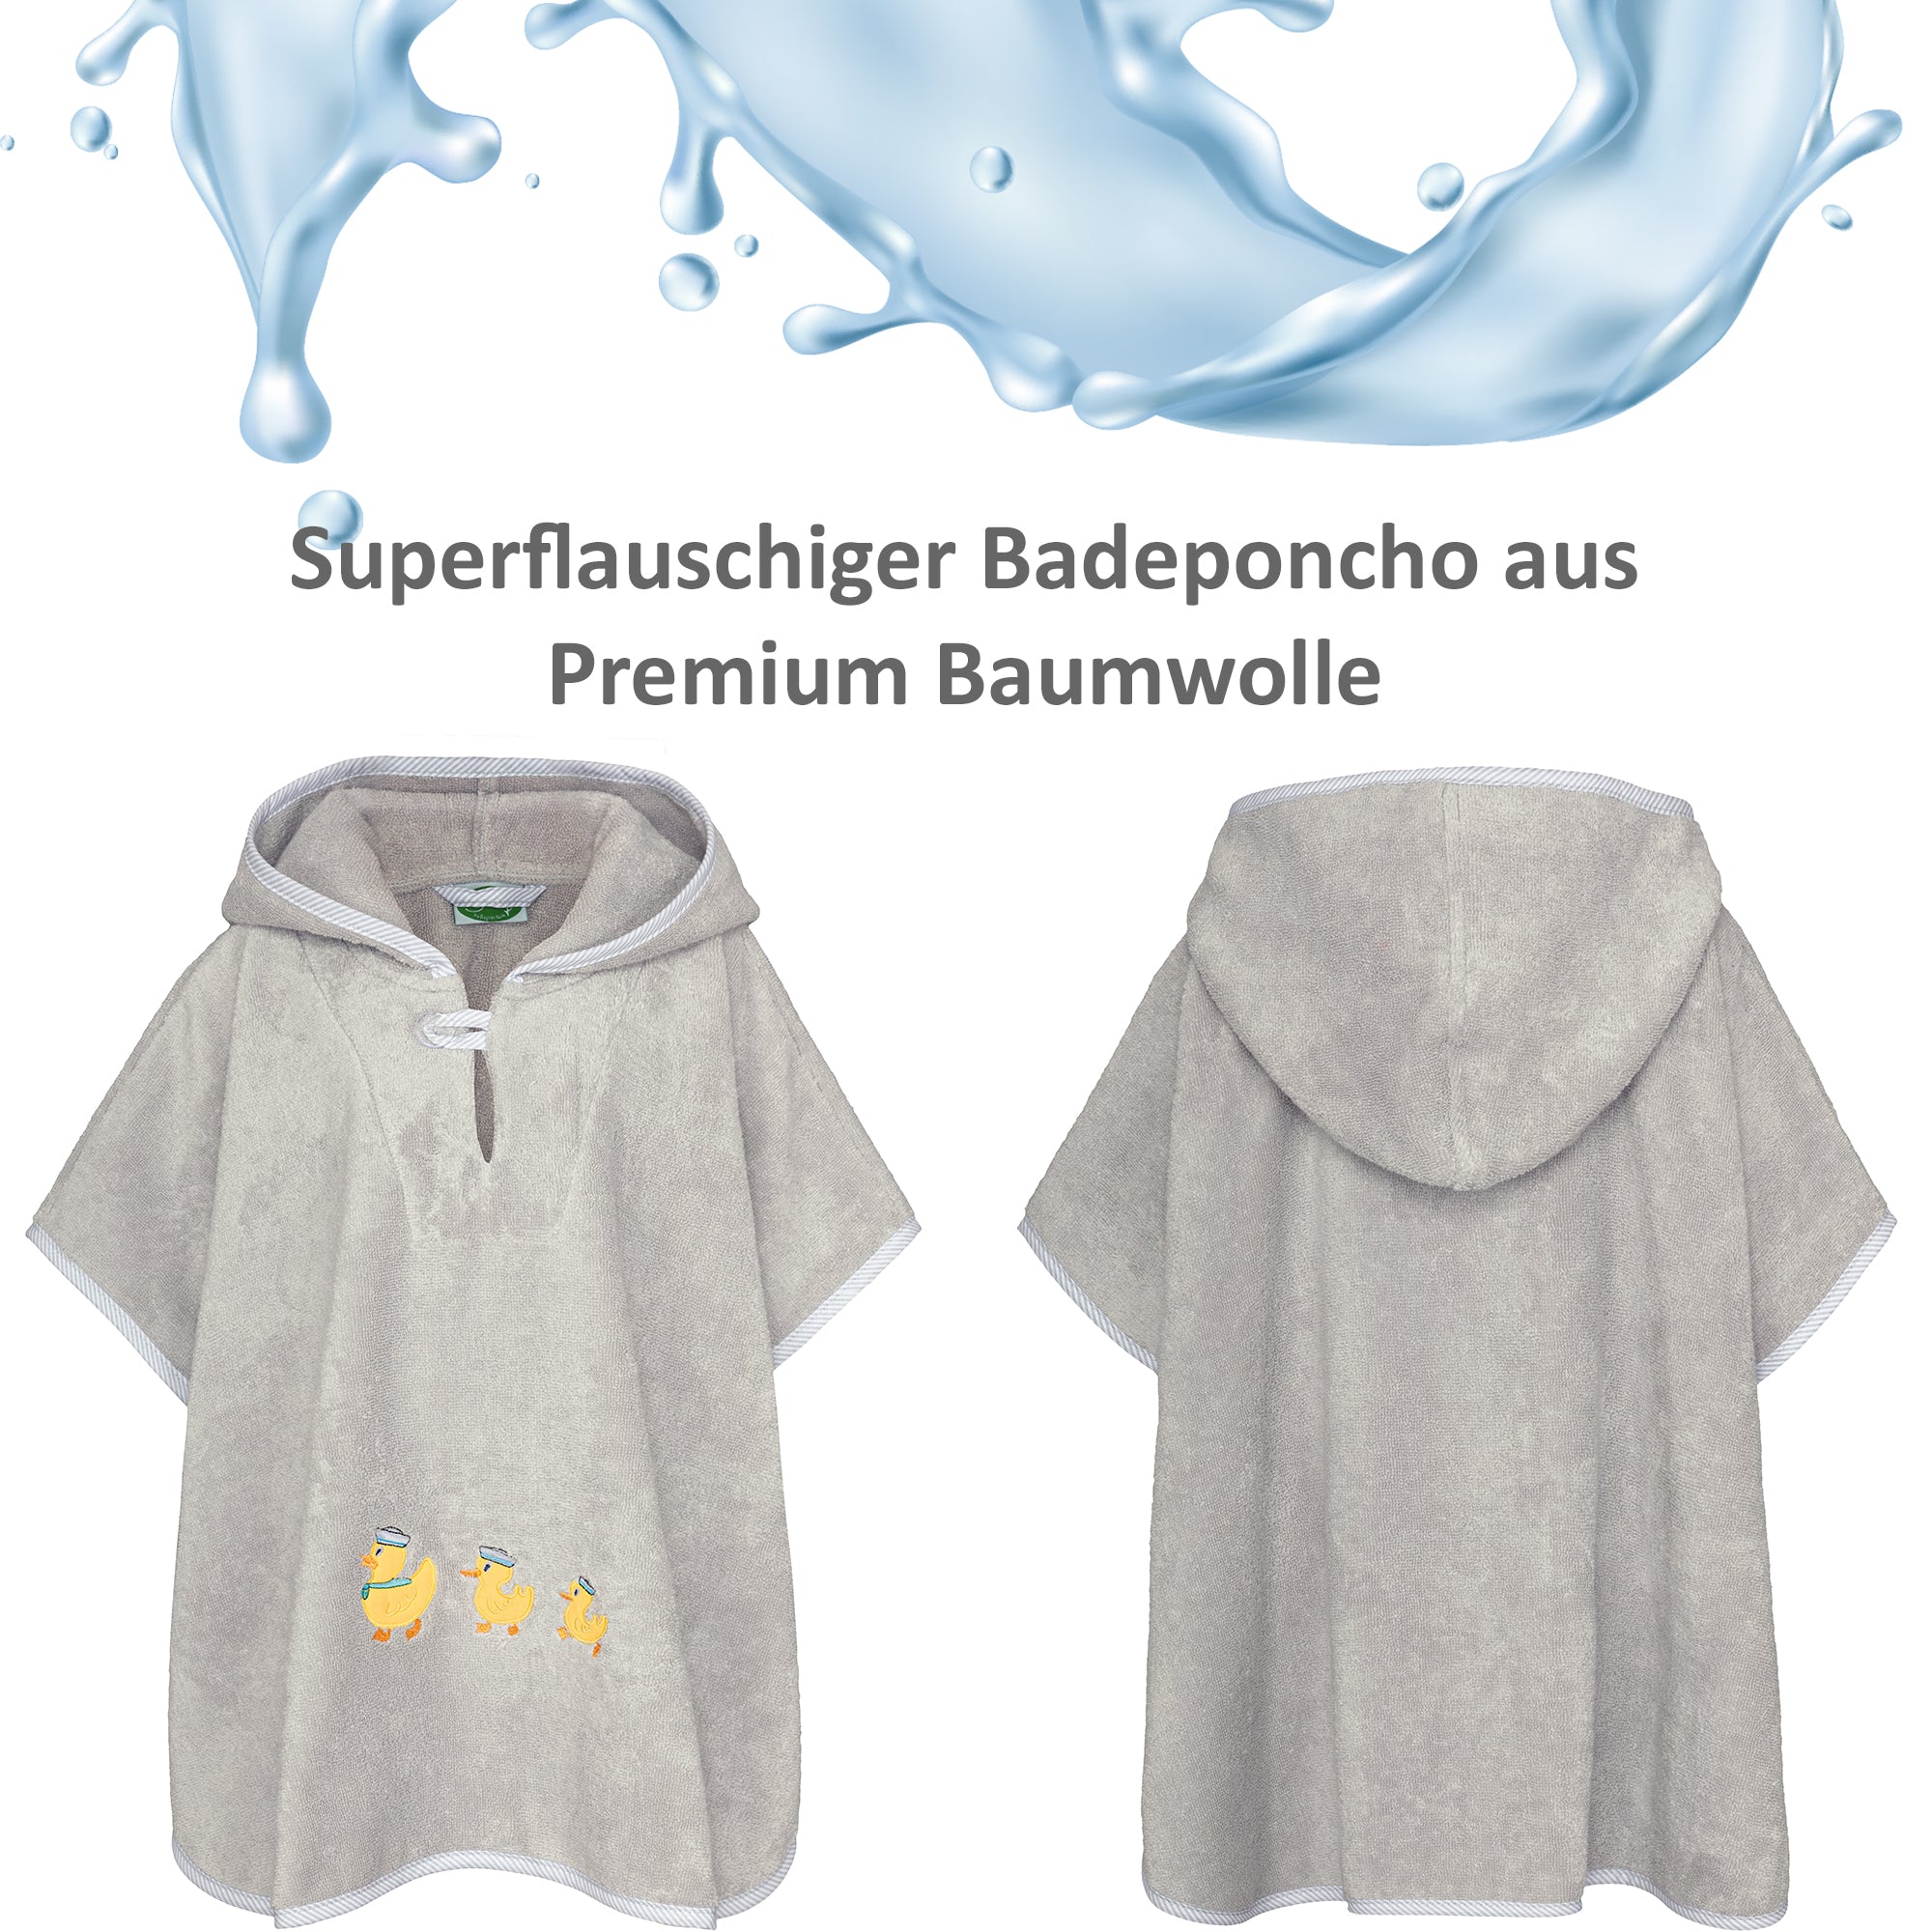 Badeponcho Premium Baumwolle, grau